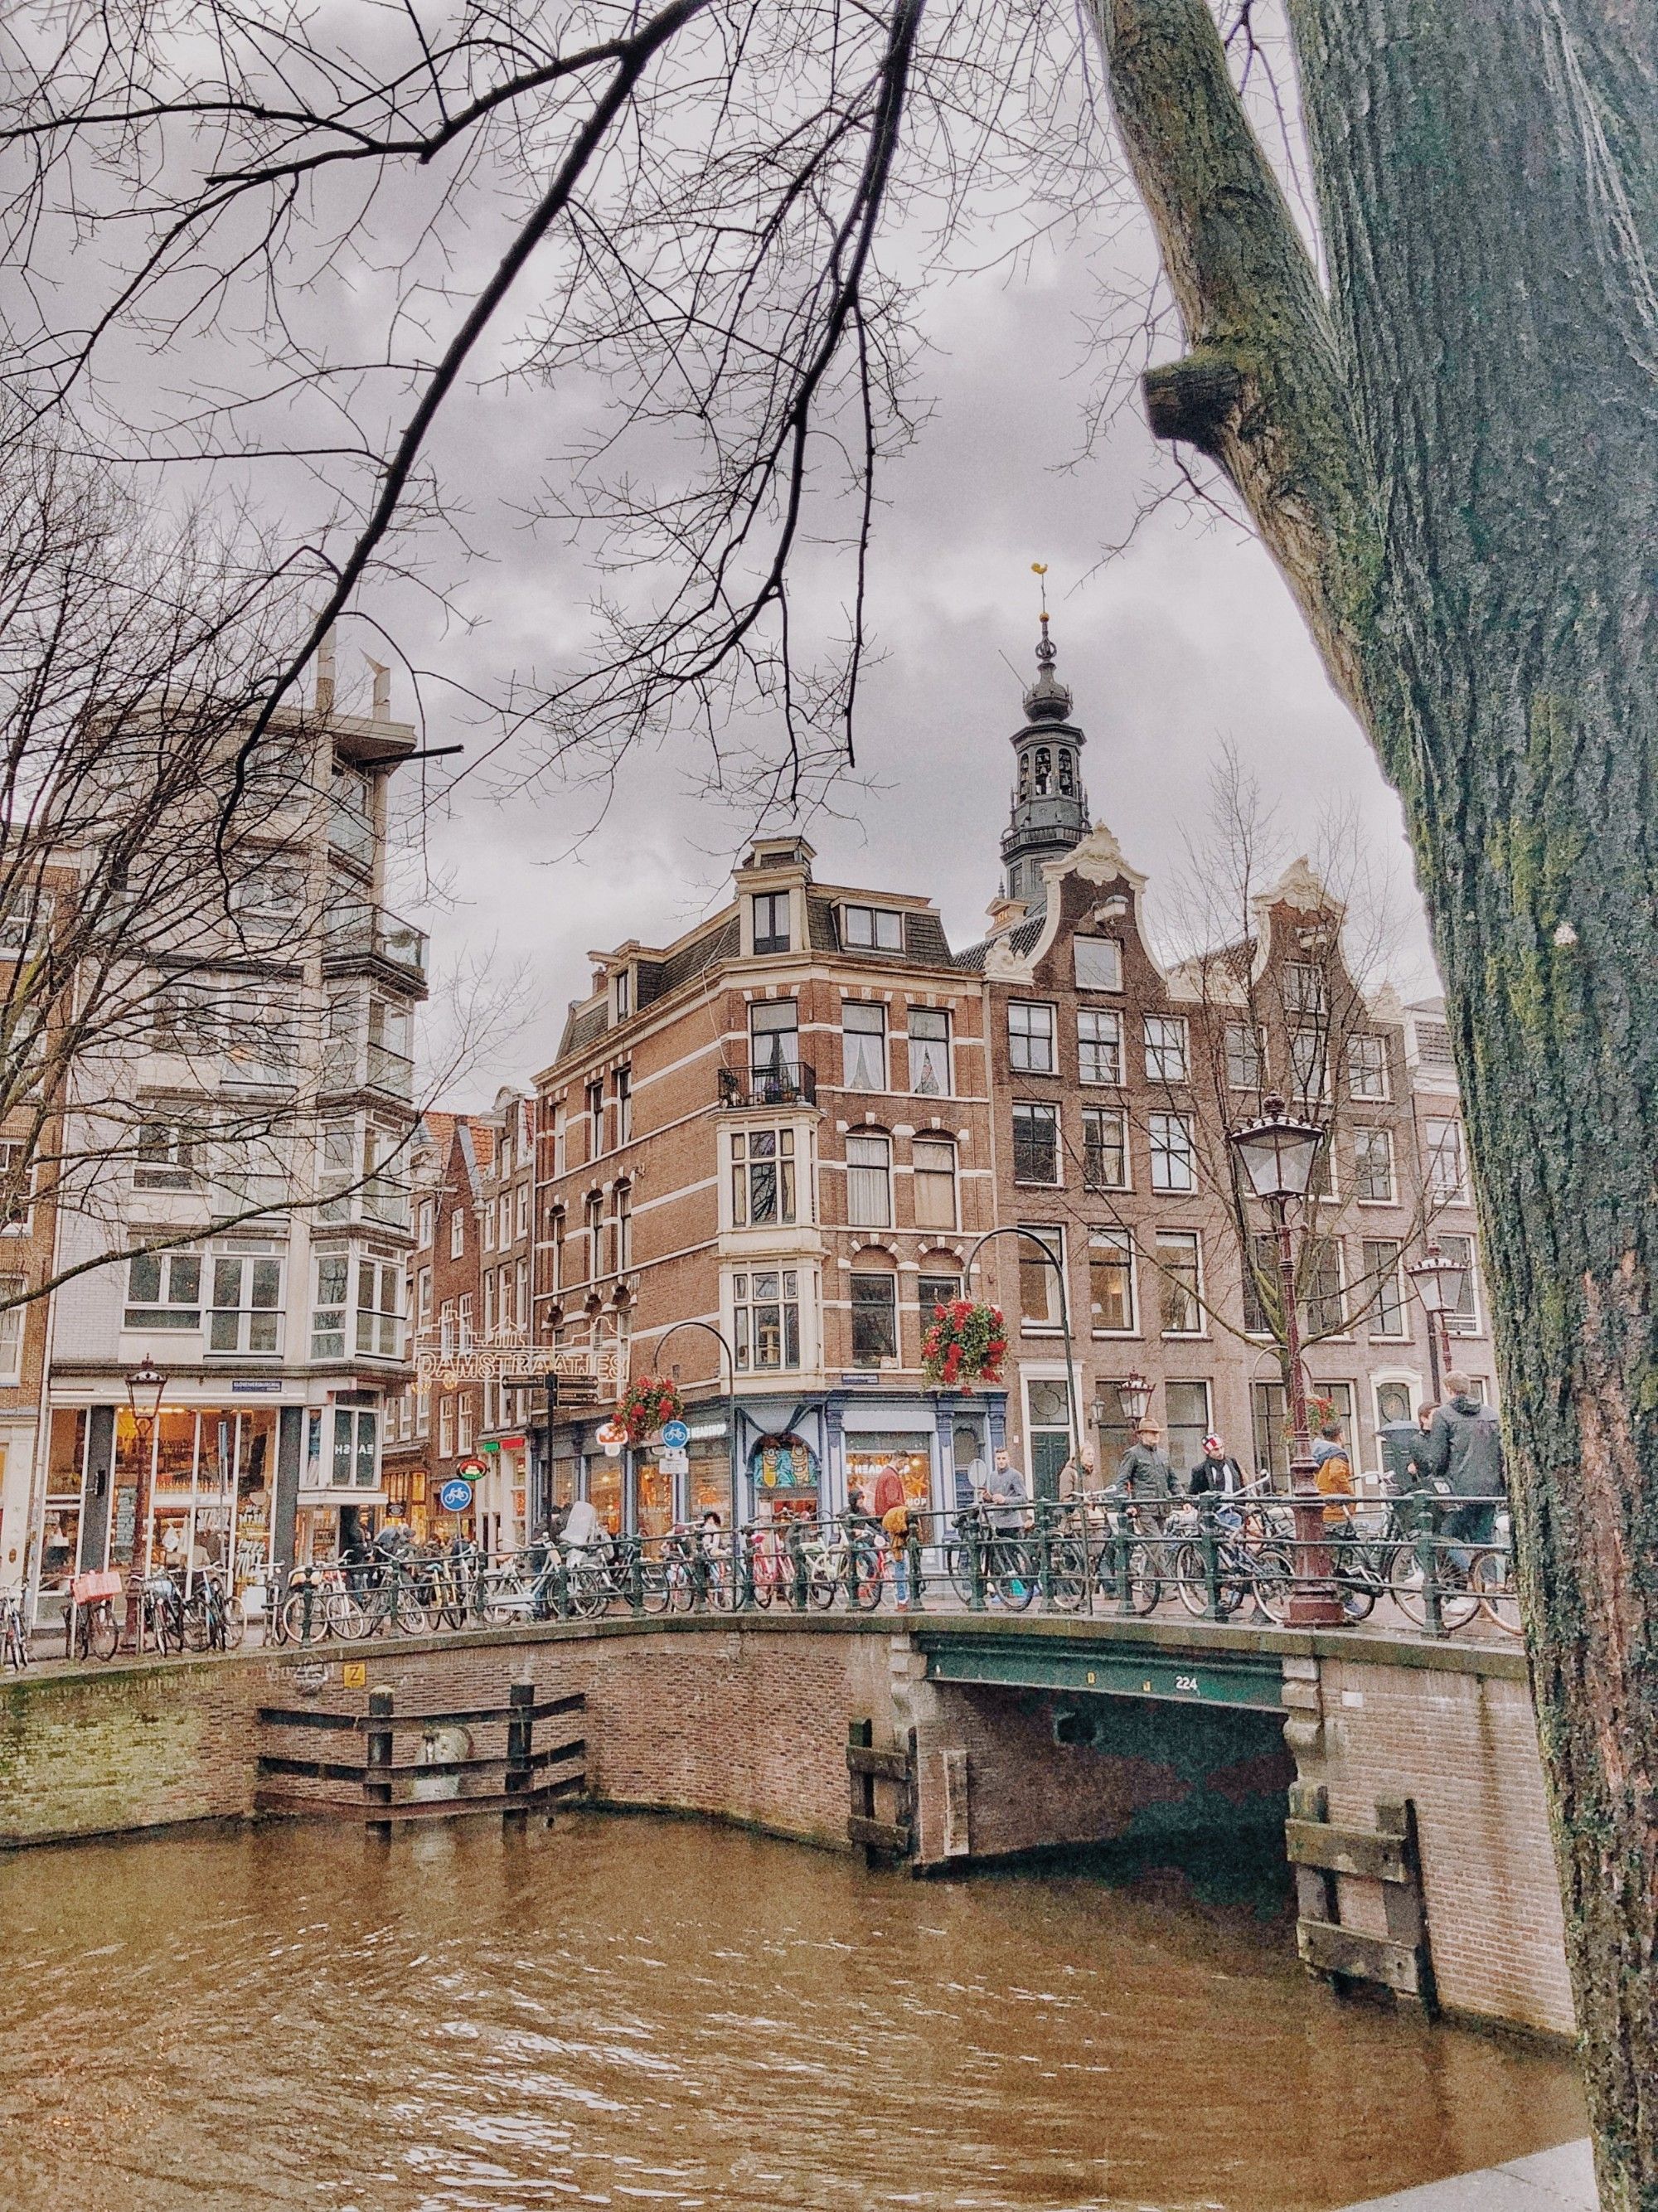 Caption: Oude Hoogstraat, Amsterdam, Netherlands.